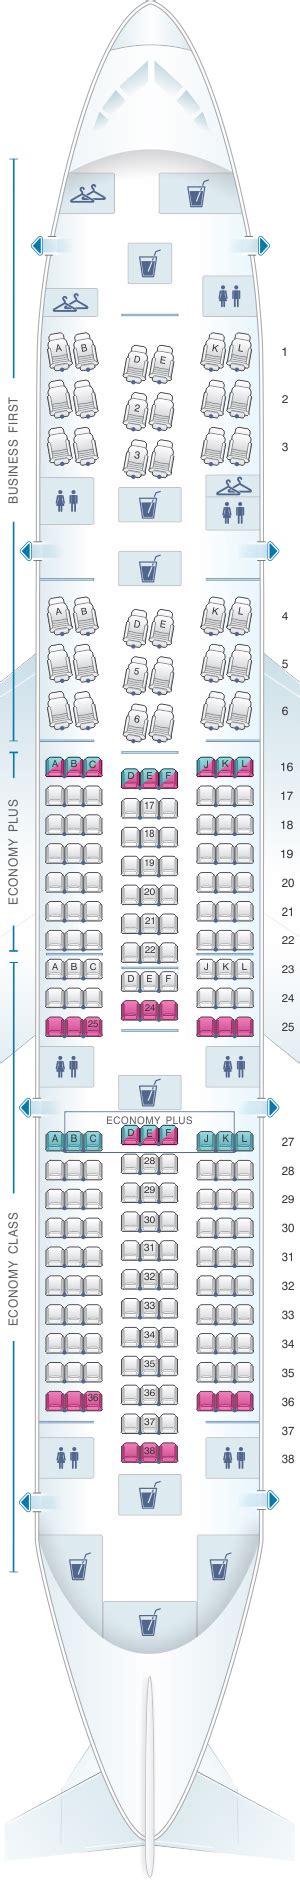 united boeing 787-8 dreamliner seat map